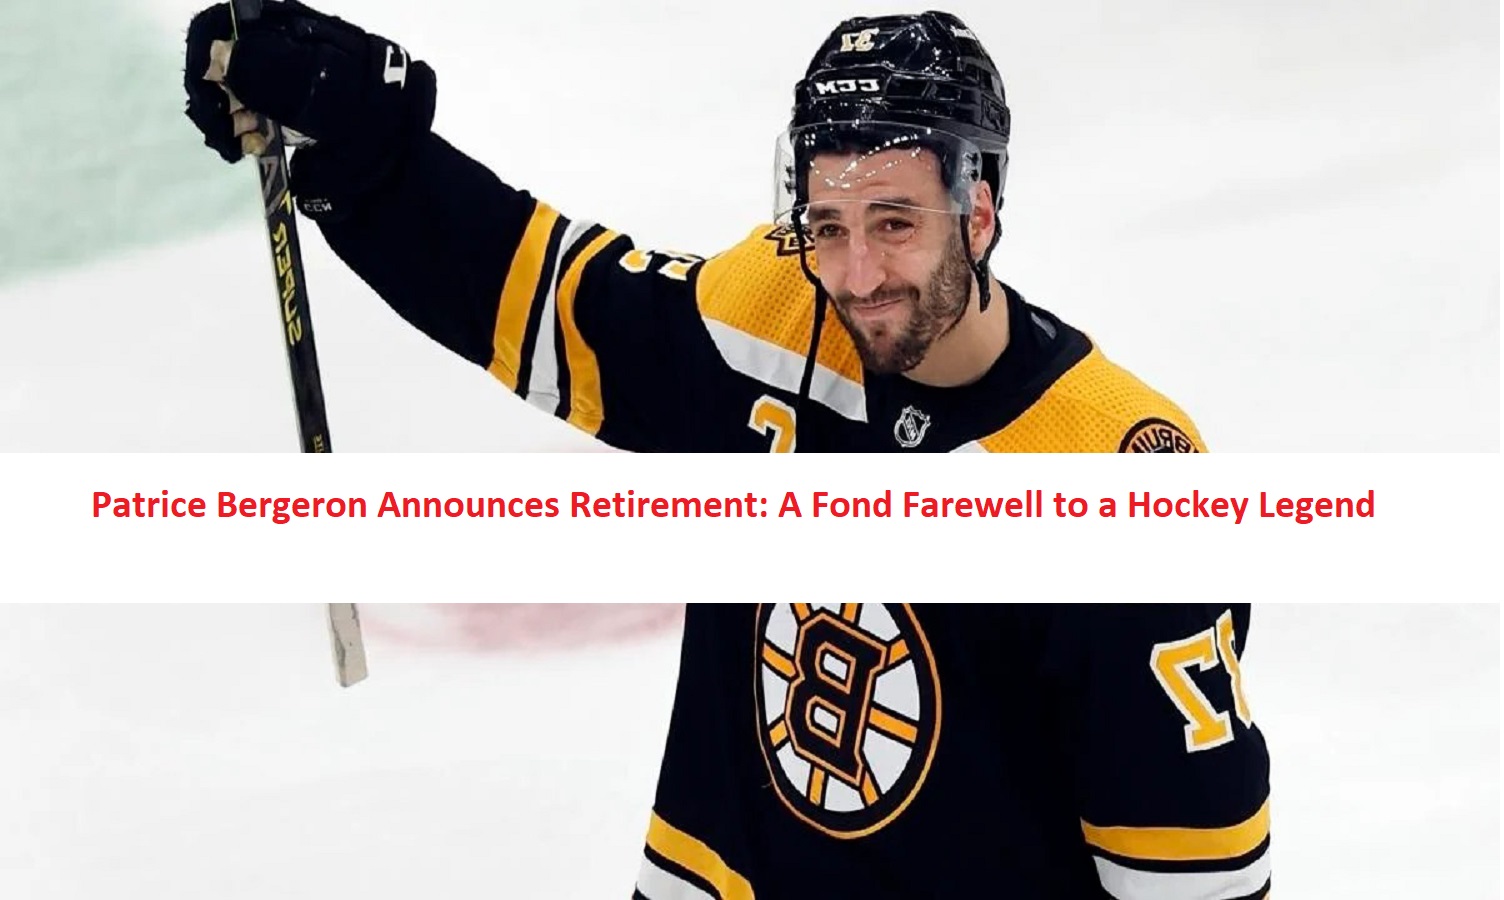 Patrice Bergeron Announces Retirement: A Fond Farewell to a Hockey Legend